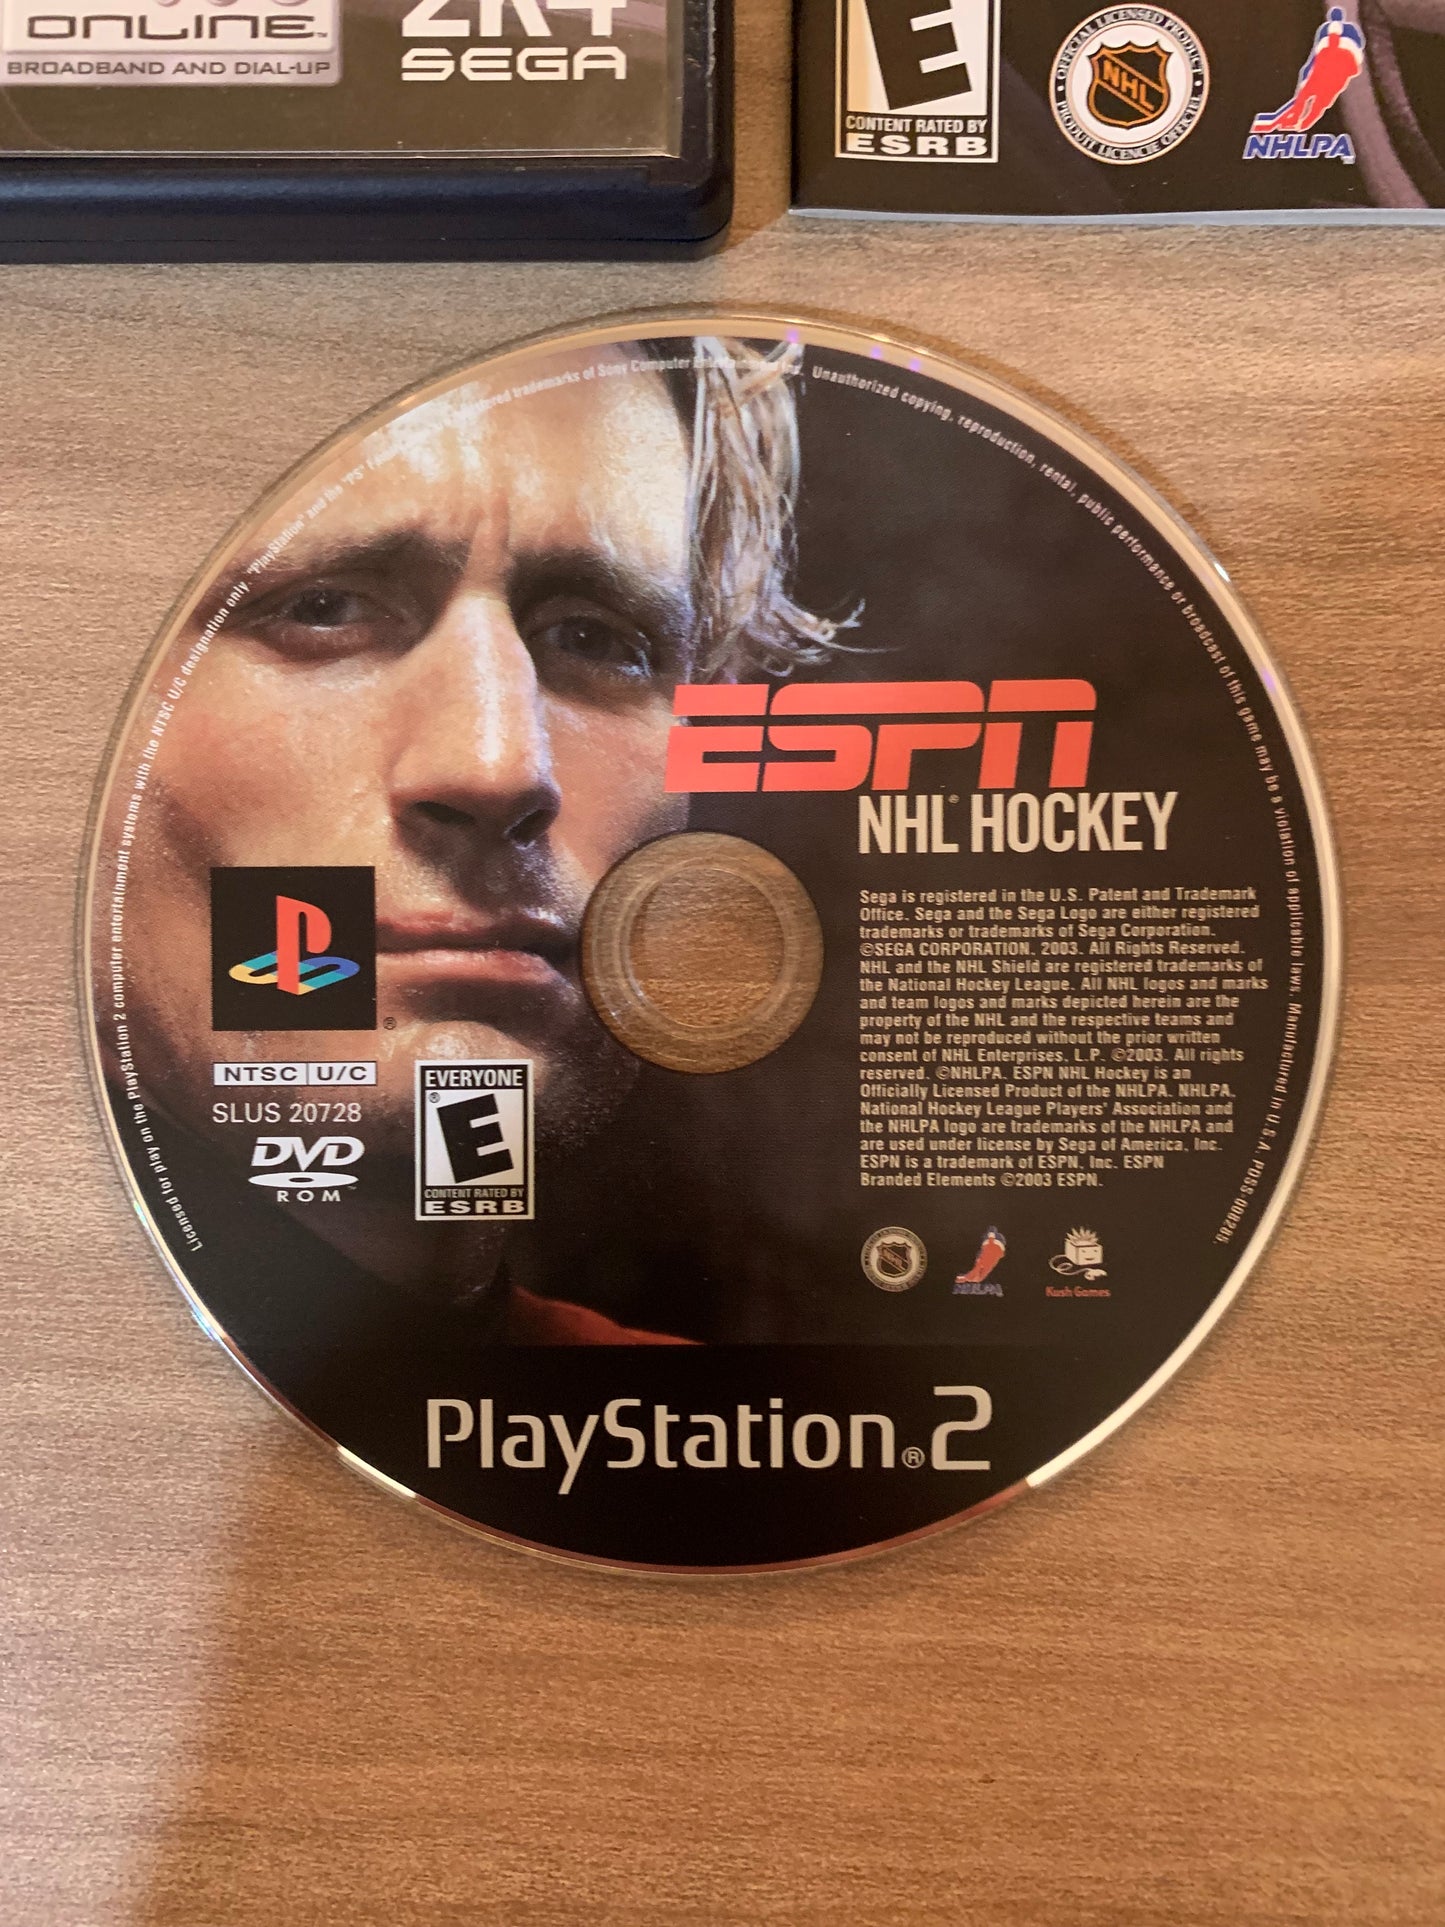 SONY PLAYSTATiON 2 [PS2] | ESPN NHL HOCKEY 2K4